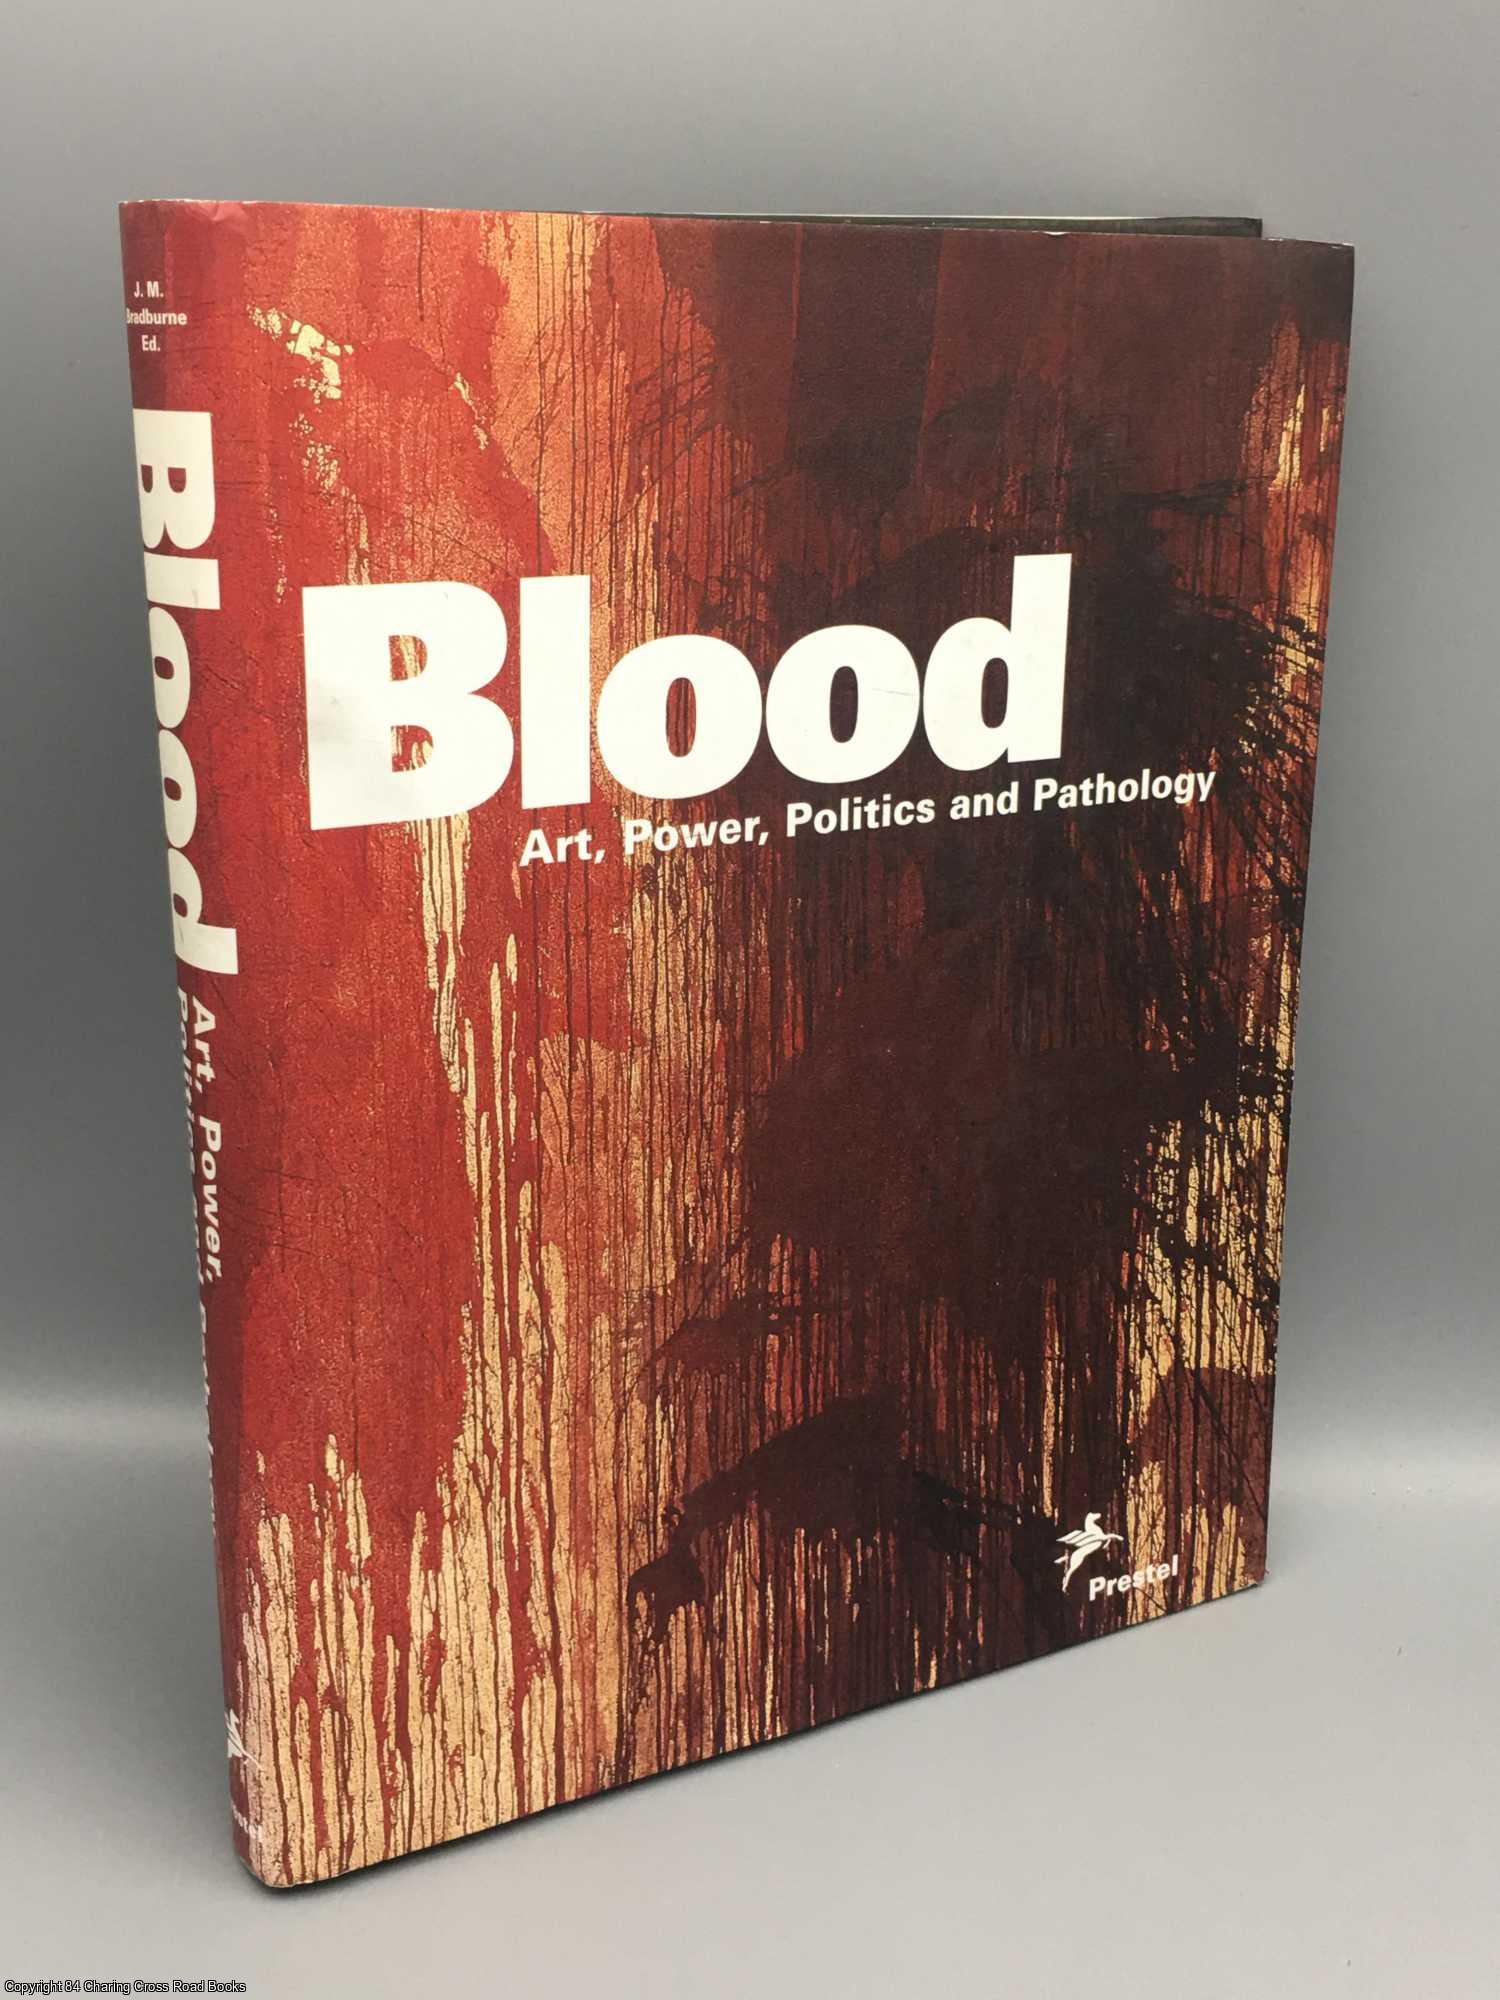 Bradburne, James M. - Blood: art, power, politics, and pathology